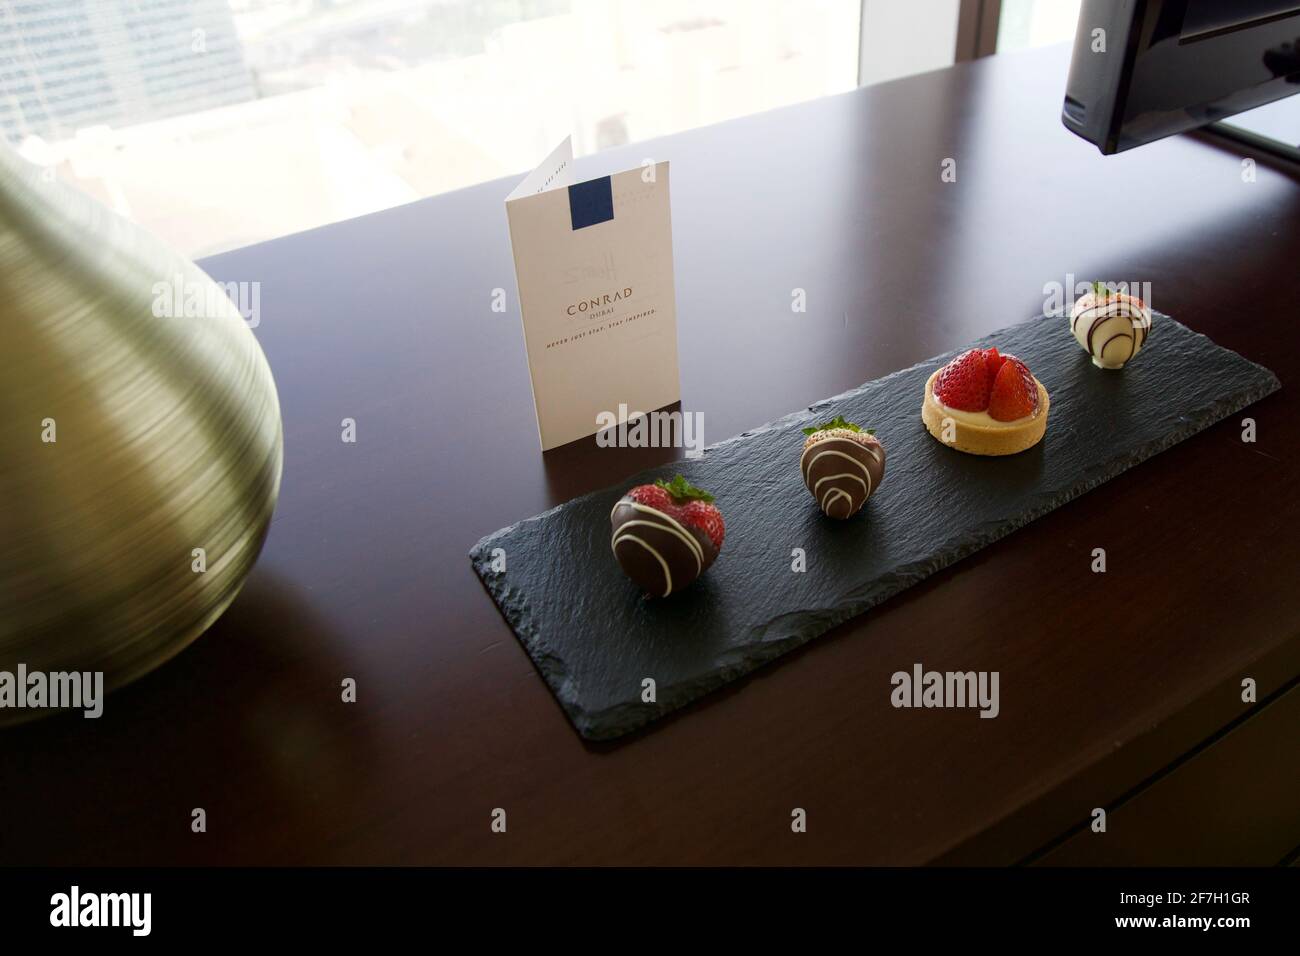 DUBAI, UNITED ARAB EMIRATES - JUN 16, 2019: Welcome snack at luxury hotel Stock Photo